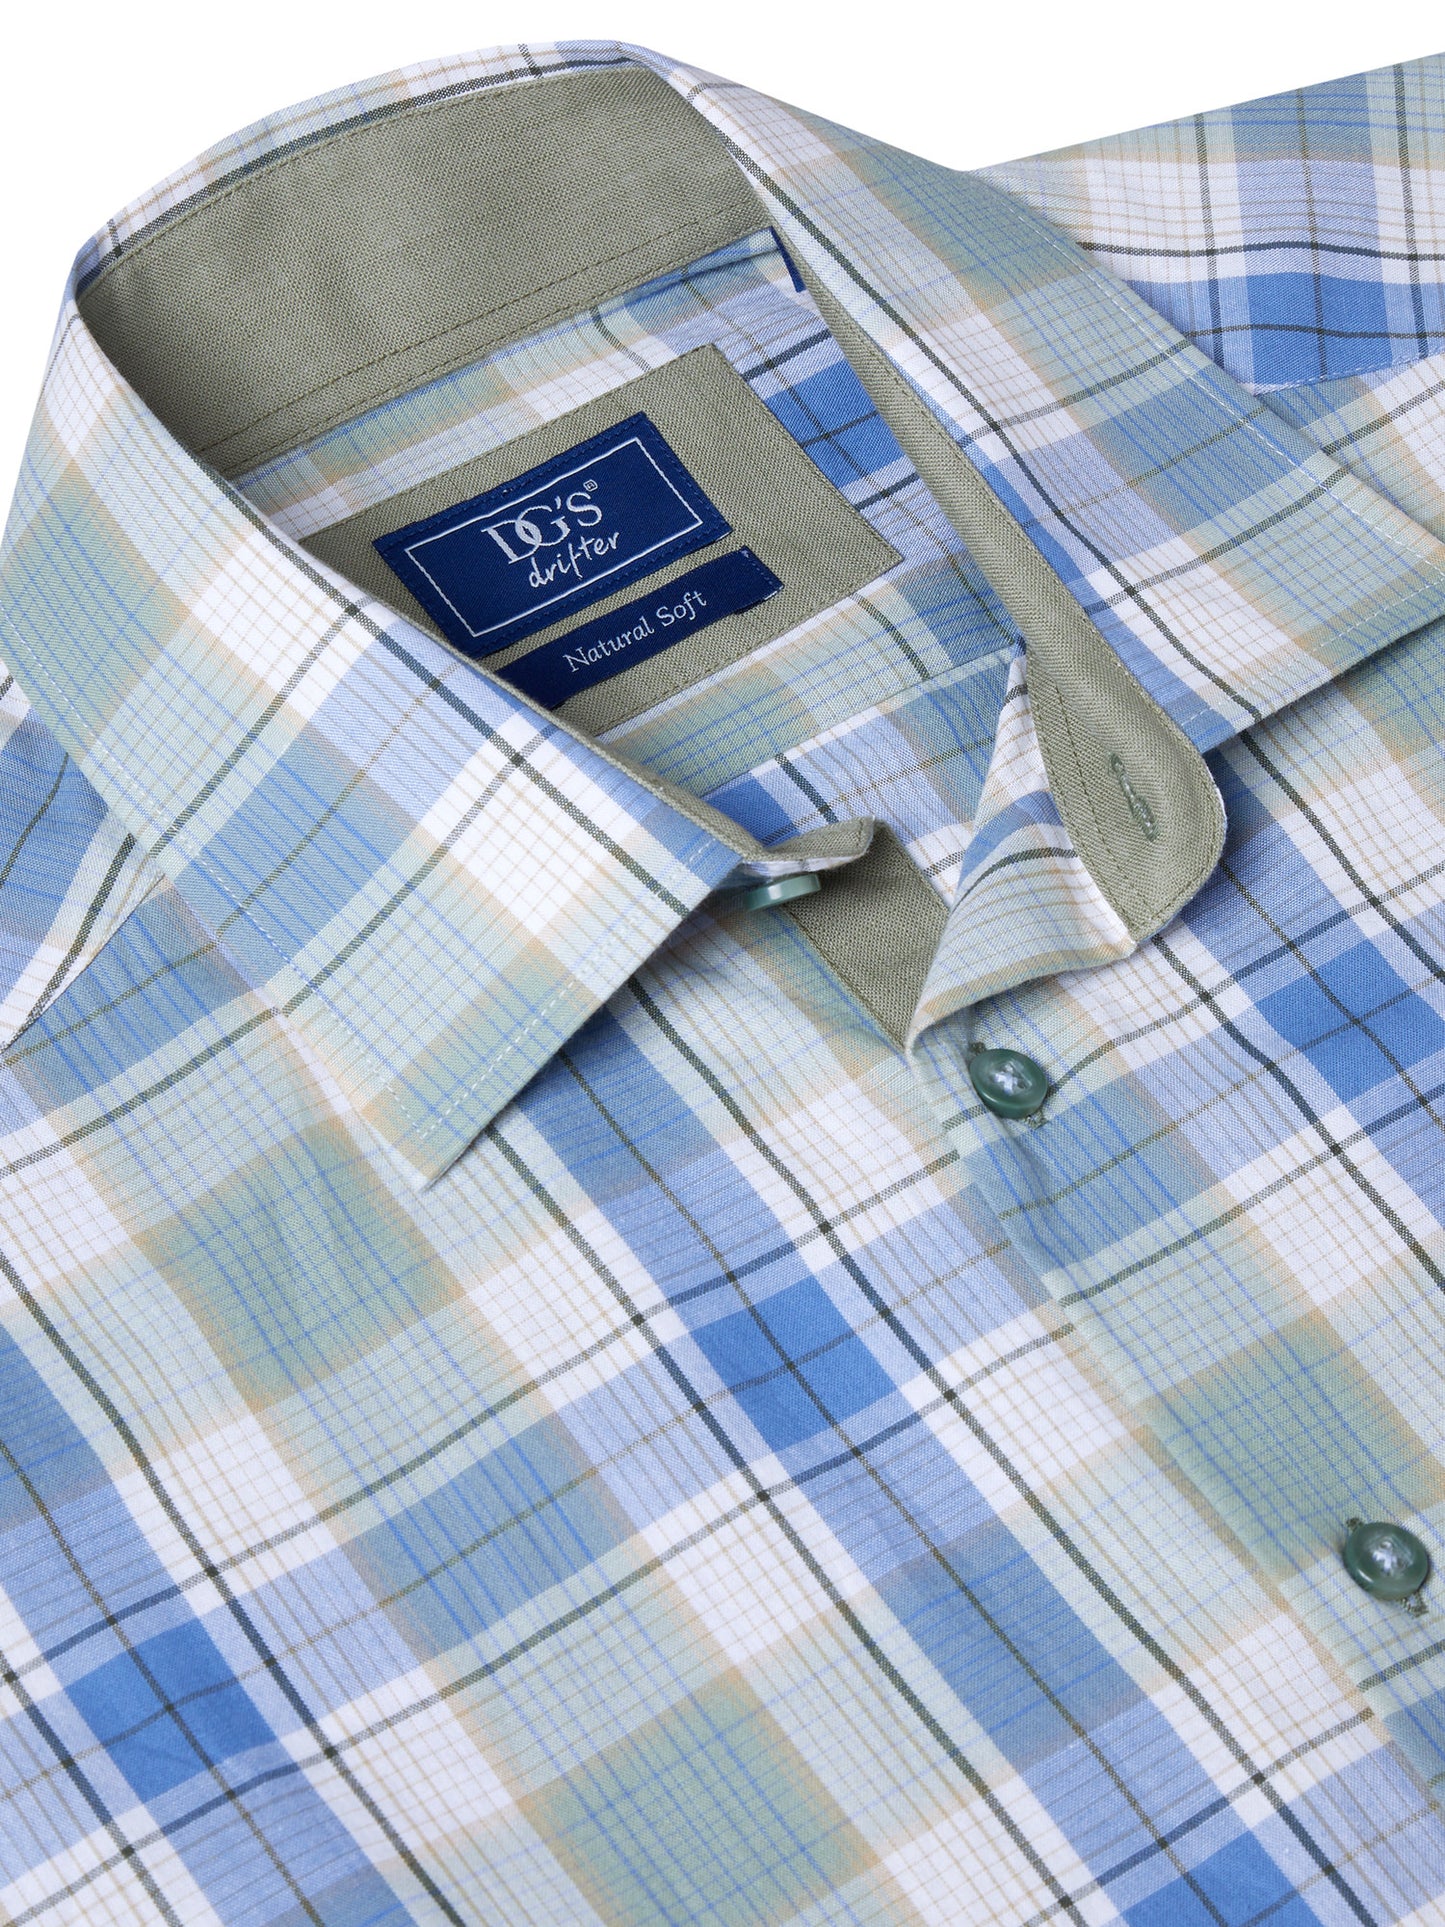 Pure Cotton Short-Sleeve Shirt - Blue / Green Check